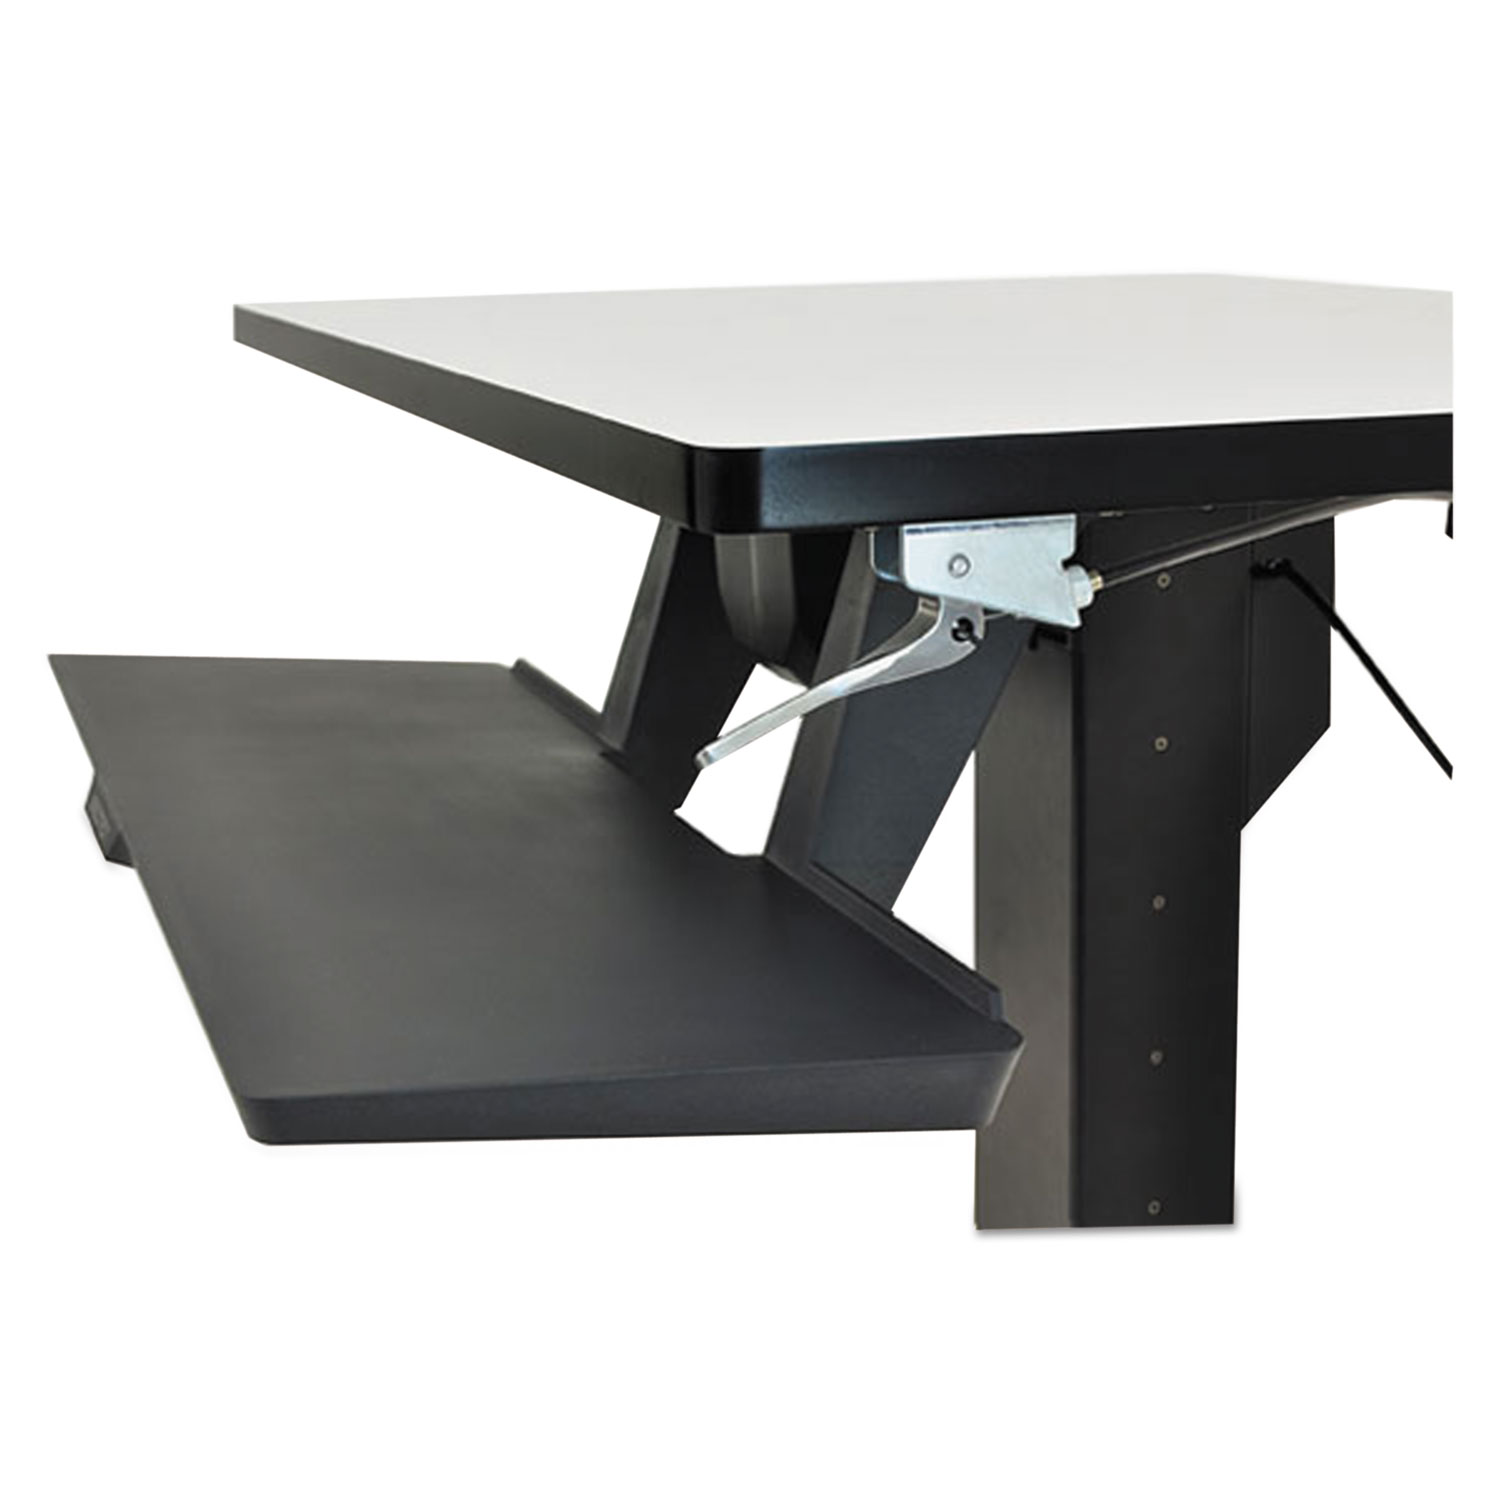 WorkFit-PD Sit-Stand Workstation, 31 1/2 x 23 1/2 x 29 1/2, Light Gray/Black